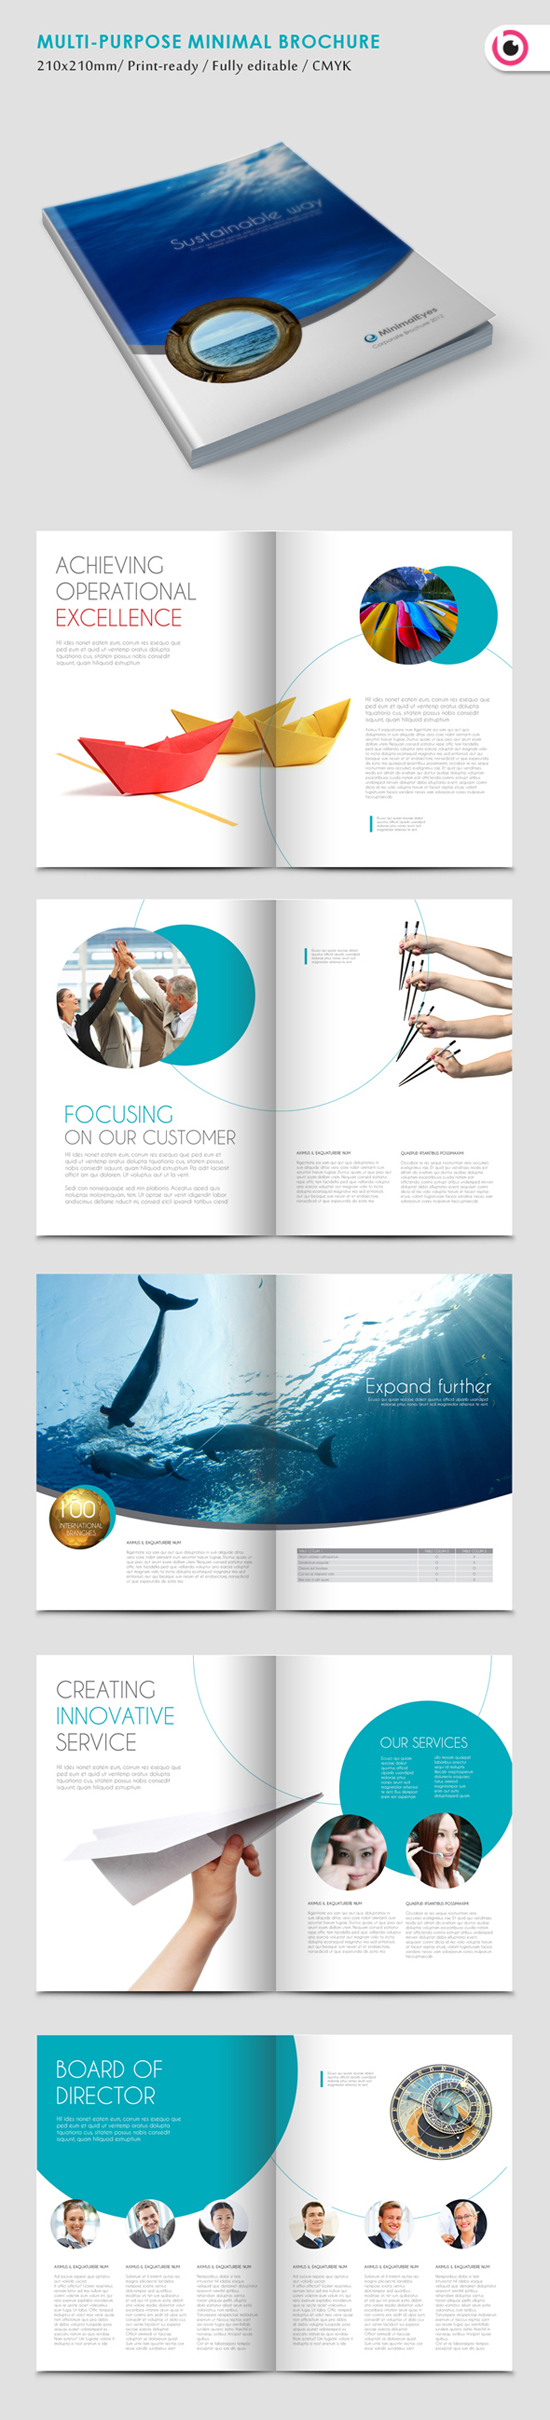 Multi-Purpose Minimal Brochure Template